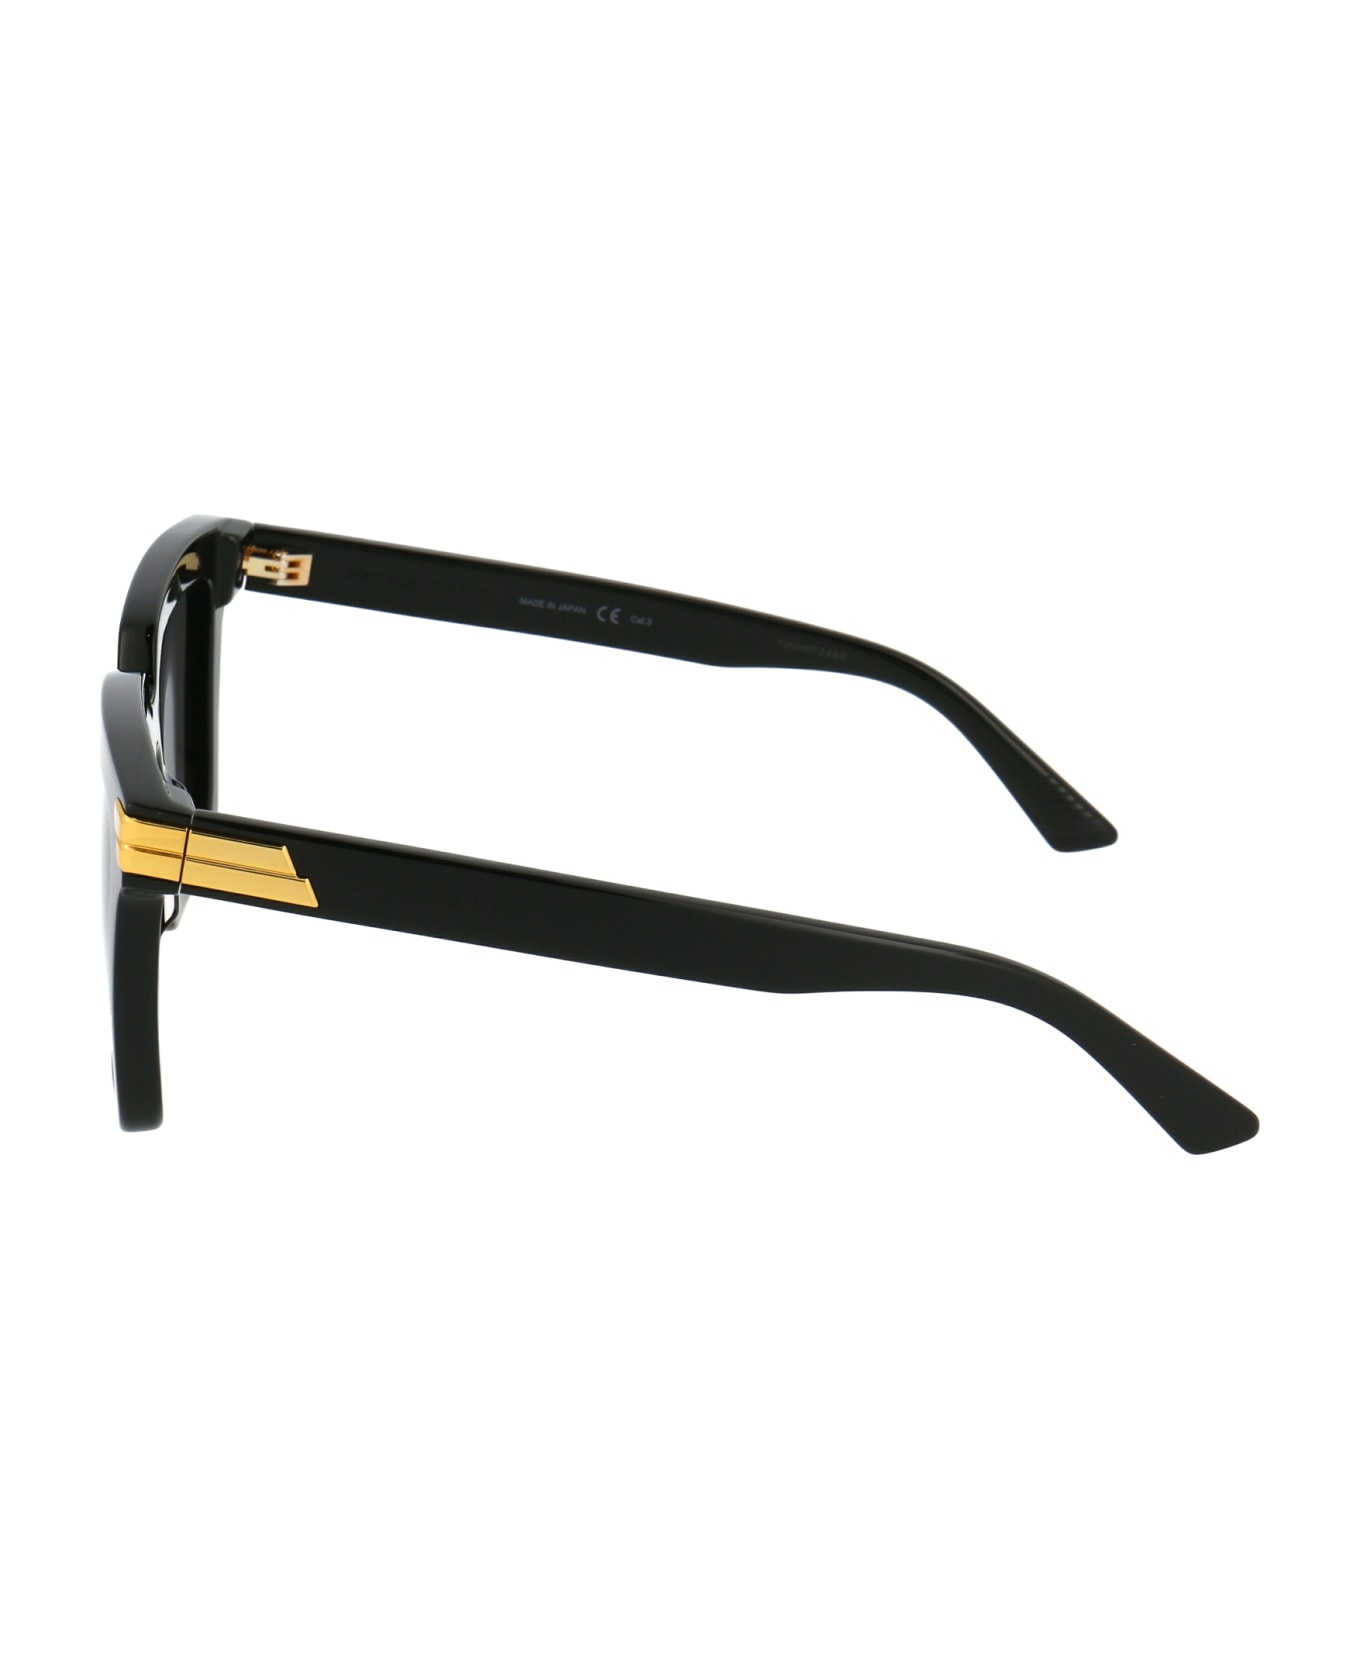 Bottega Veneta Eyewear Bv1005s Sunglasses - 001 BLACK BLACK GREY